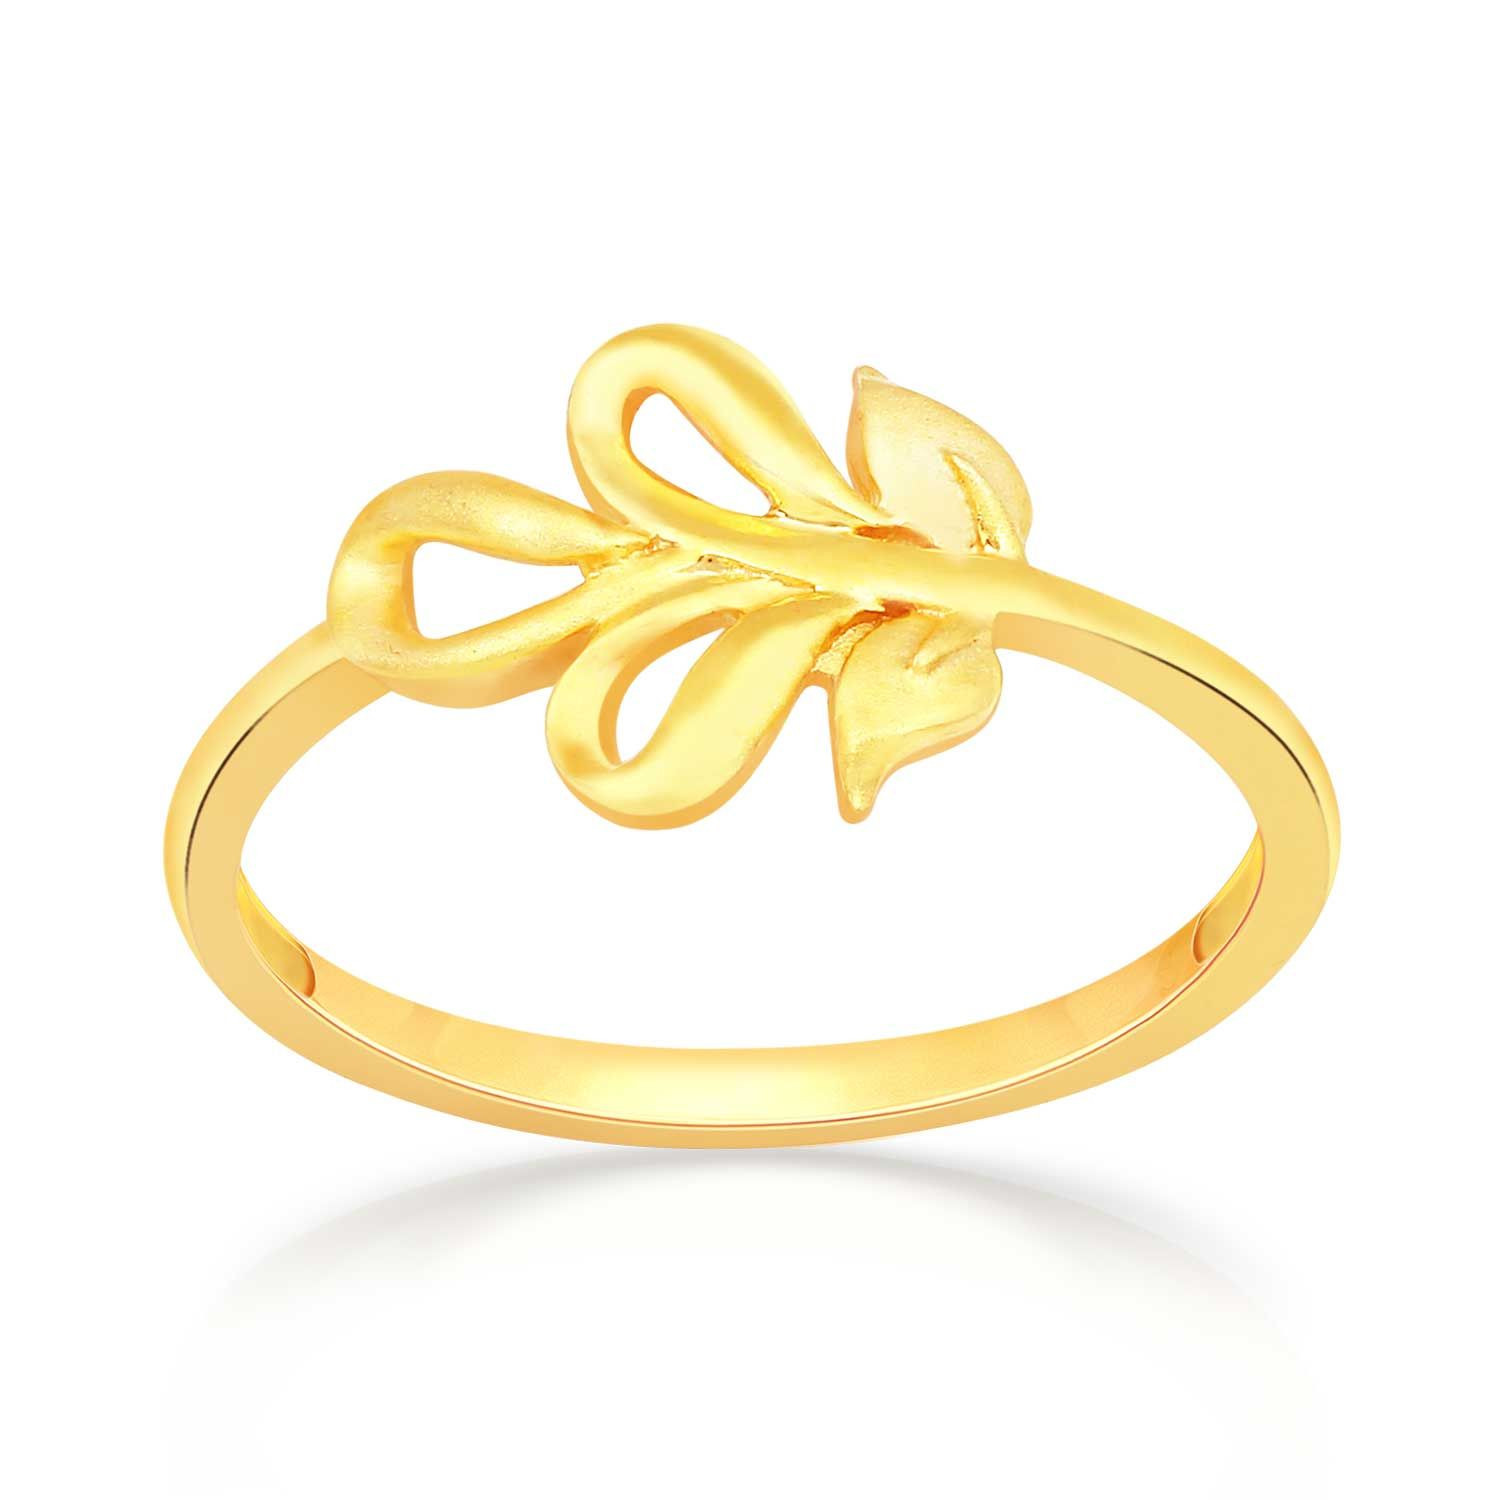 Malabar 22 KT Gold Studded Casual Ring FRSKYDZ112